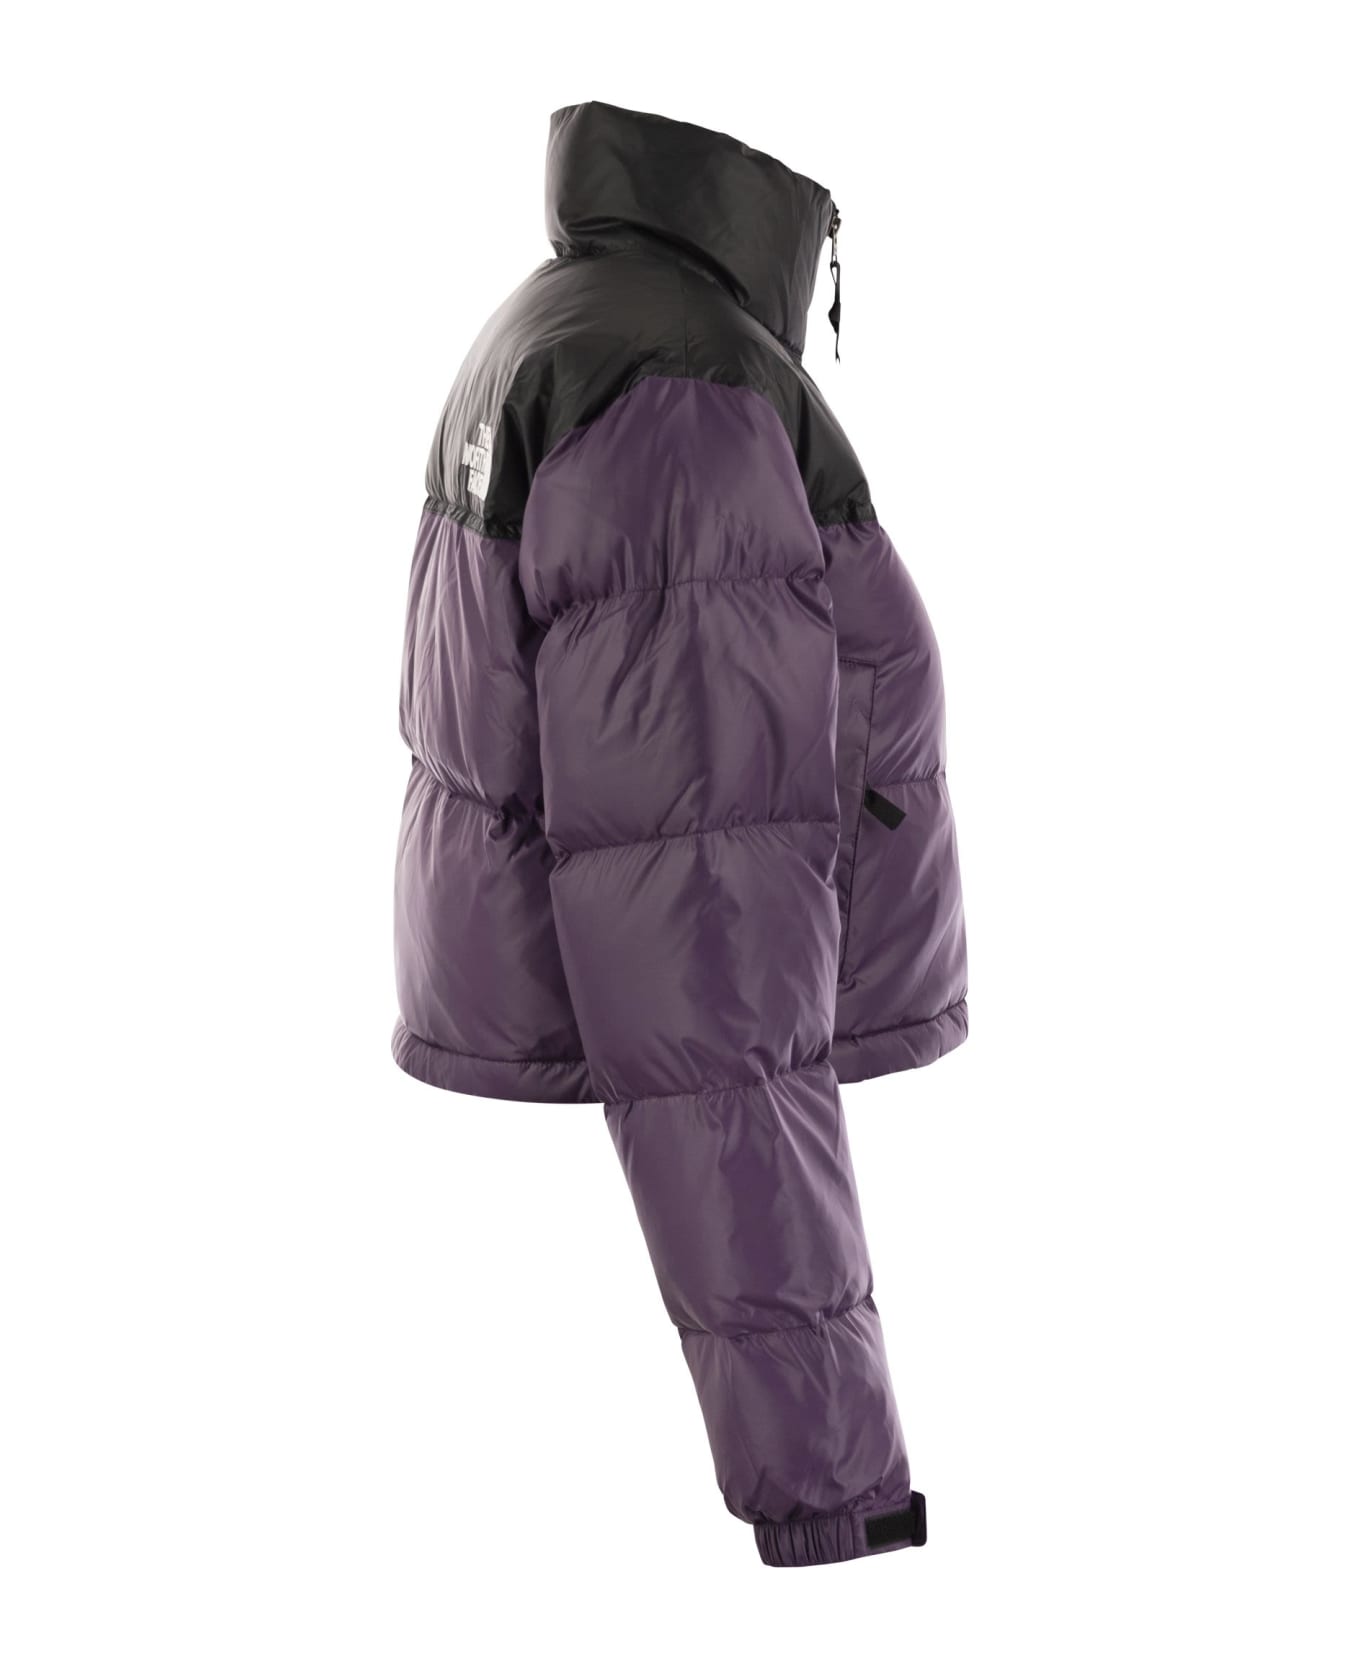 The North Face 1996 Retro Nuptse Short Down Jacket - Purple